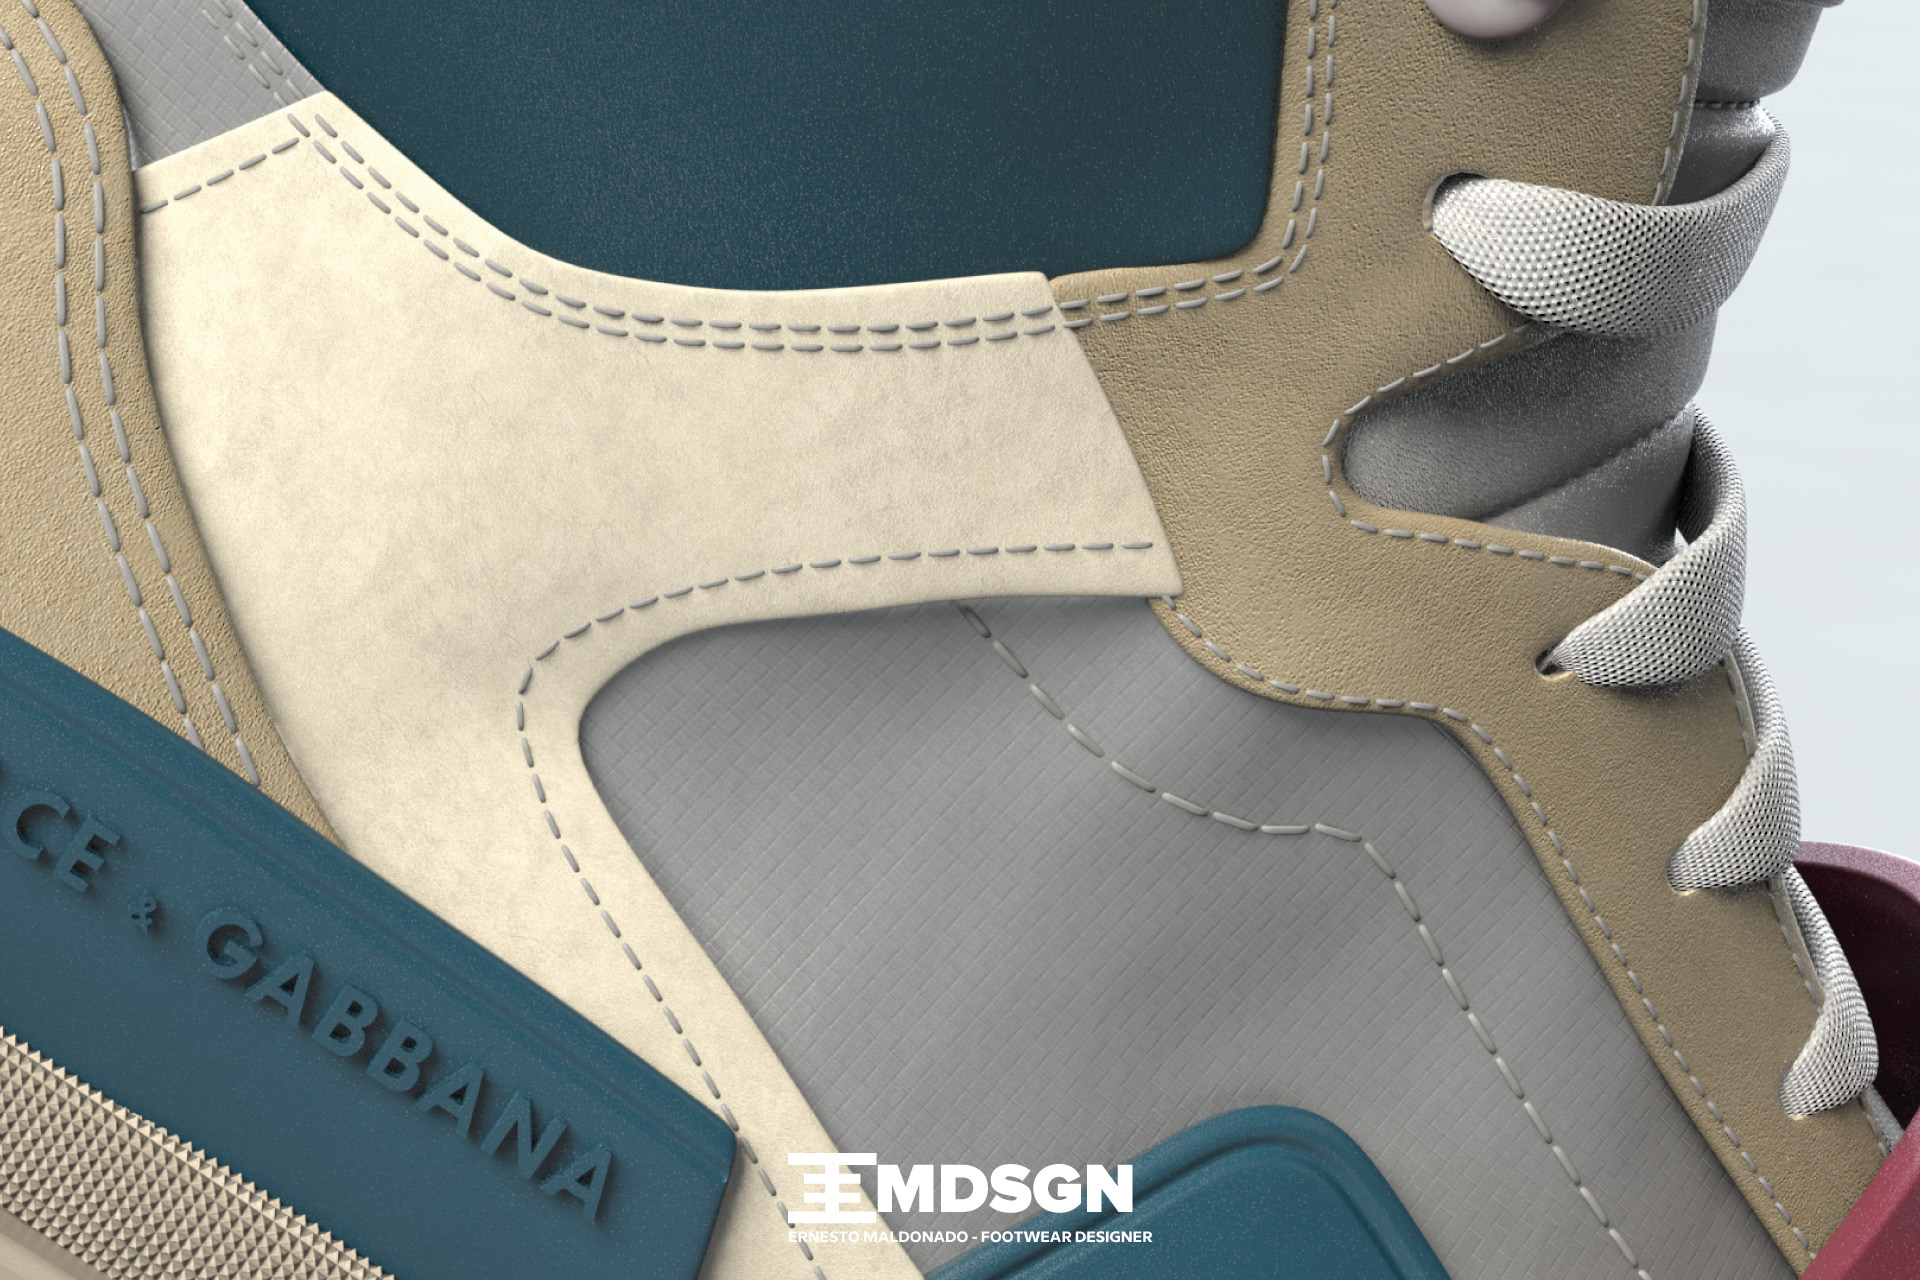 ernesto maldonado footwear 3d designer shoes design 3d shoes